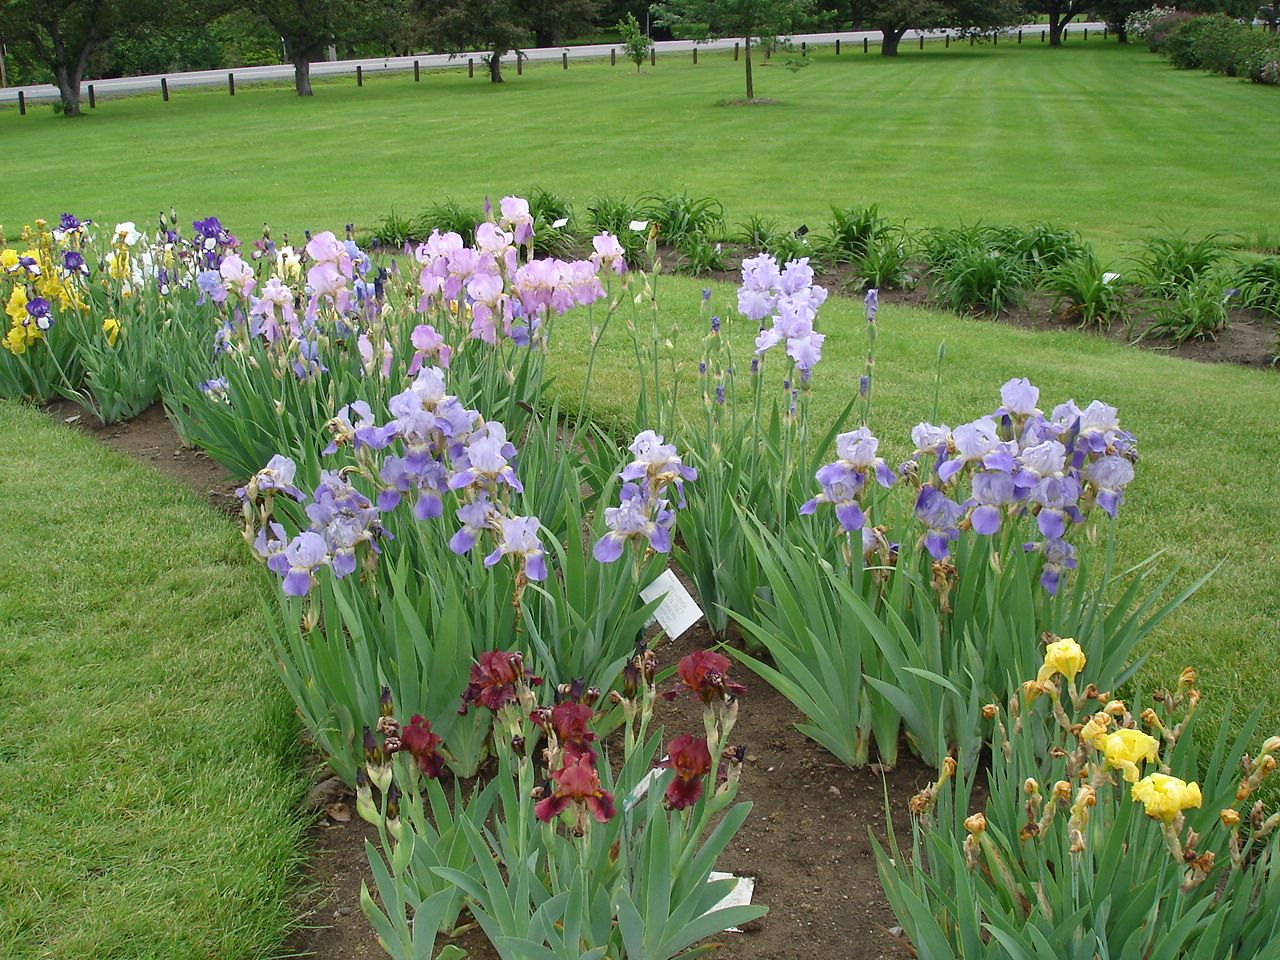 The Blue Iris Garden